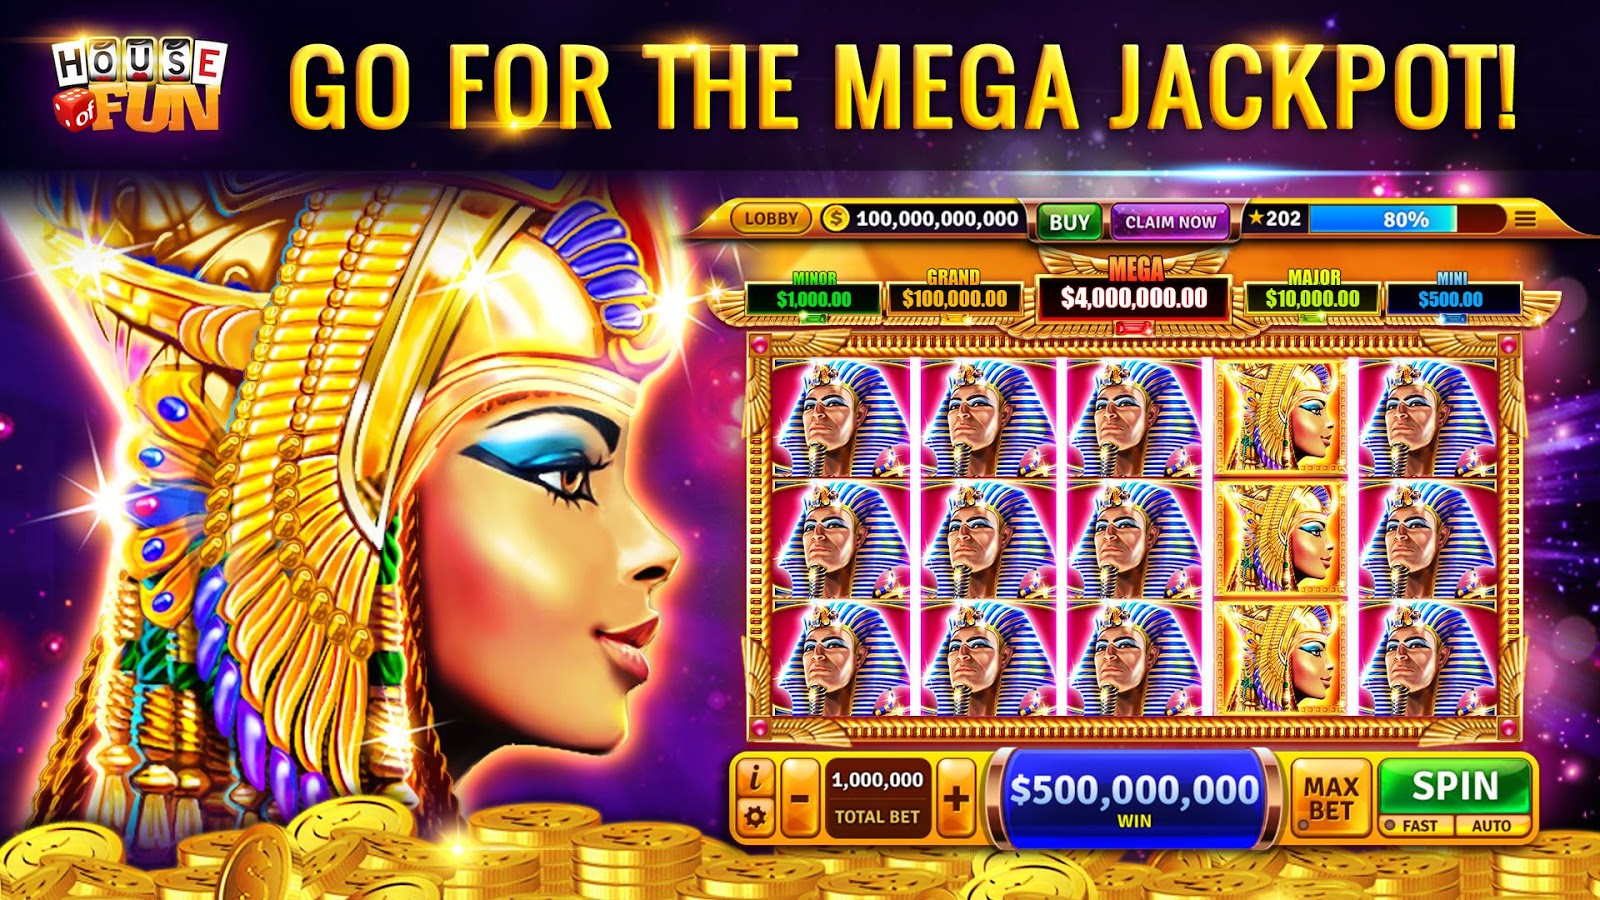 Juegos house of fun party Casino slots - 57331